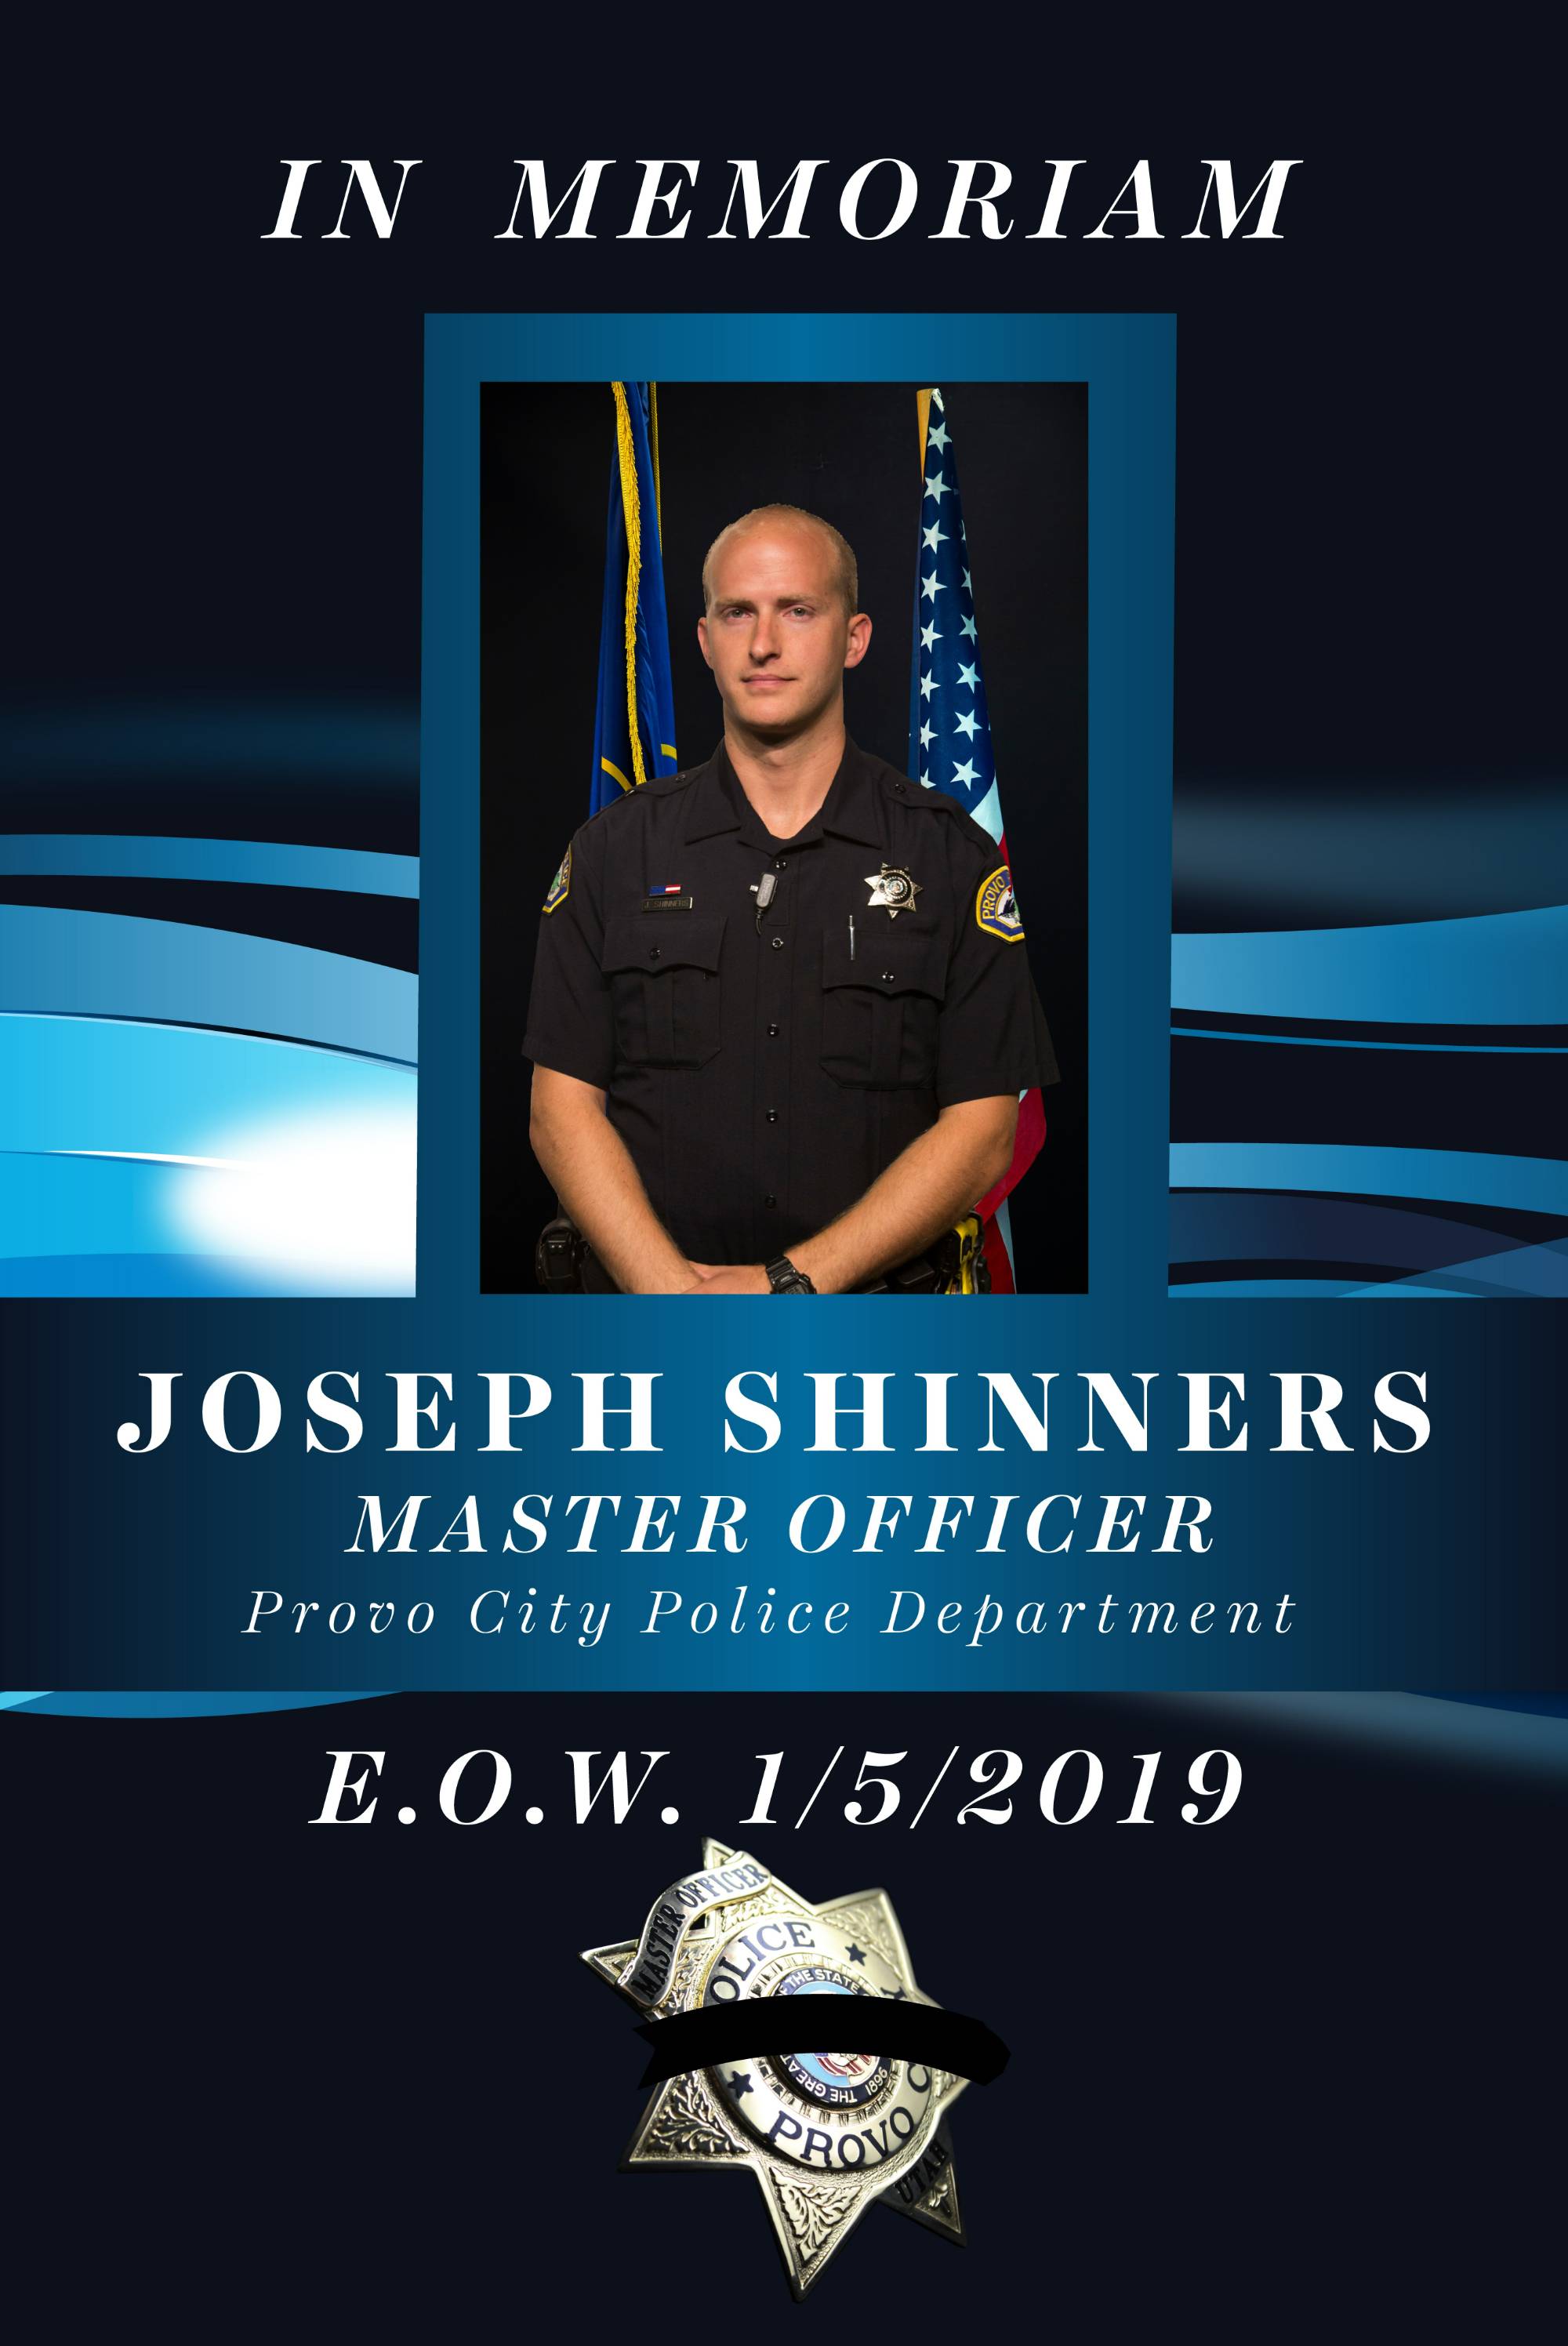 In memoriam: Jopseph Shinners, Master Officer, Provo police department, E.O.W. 1/5/2019